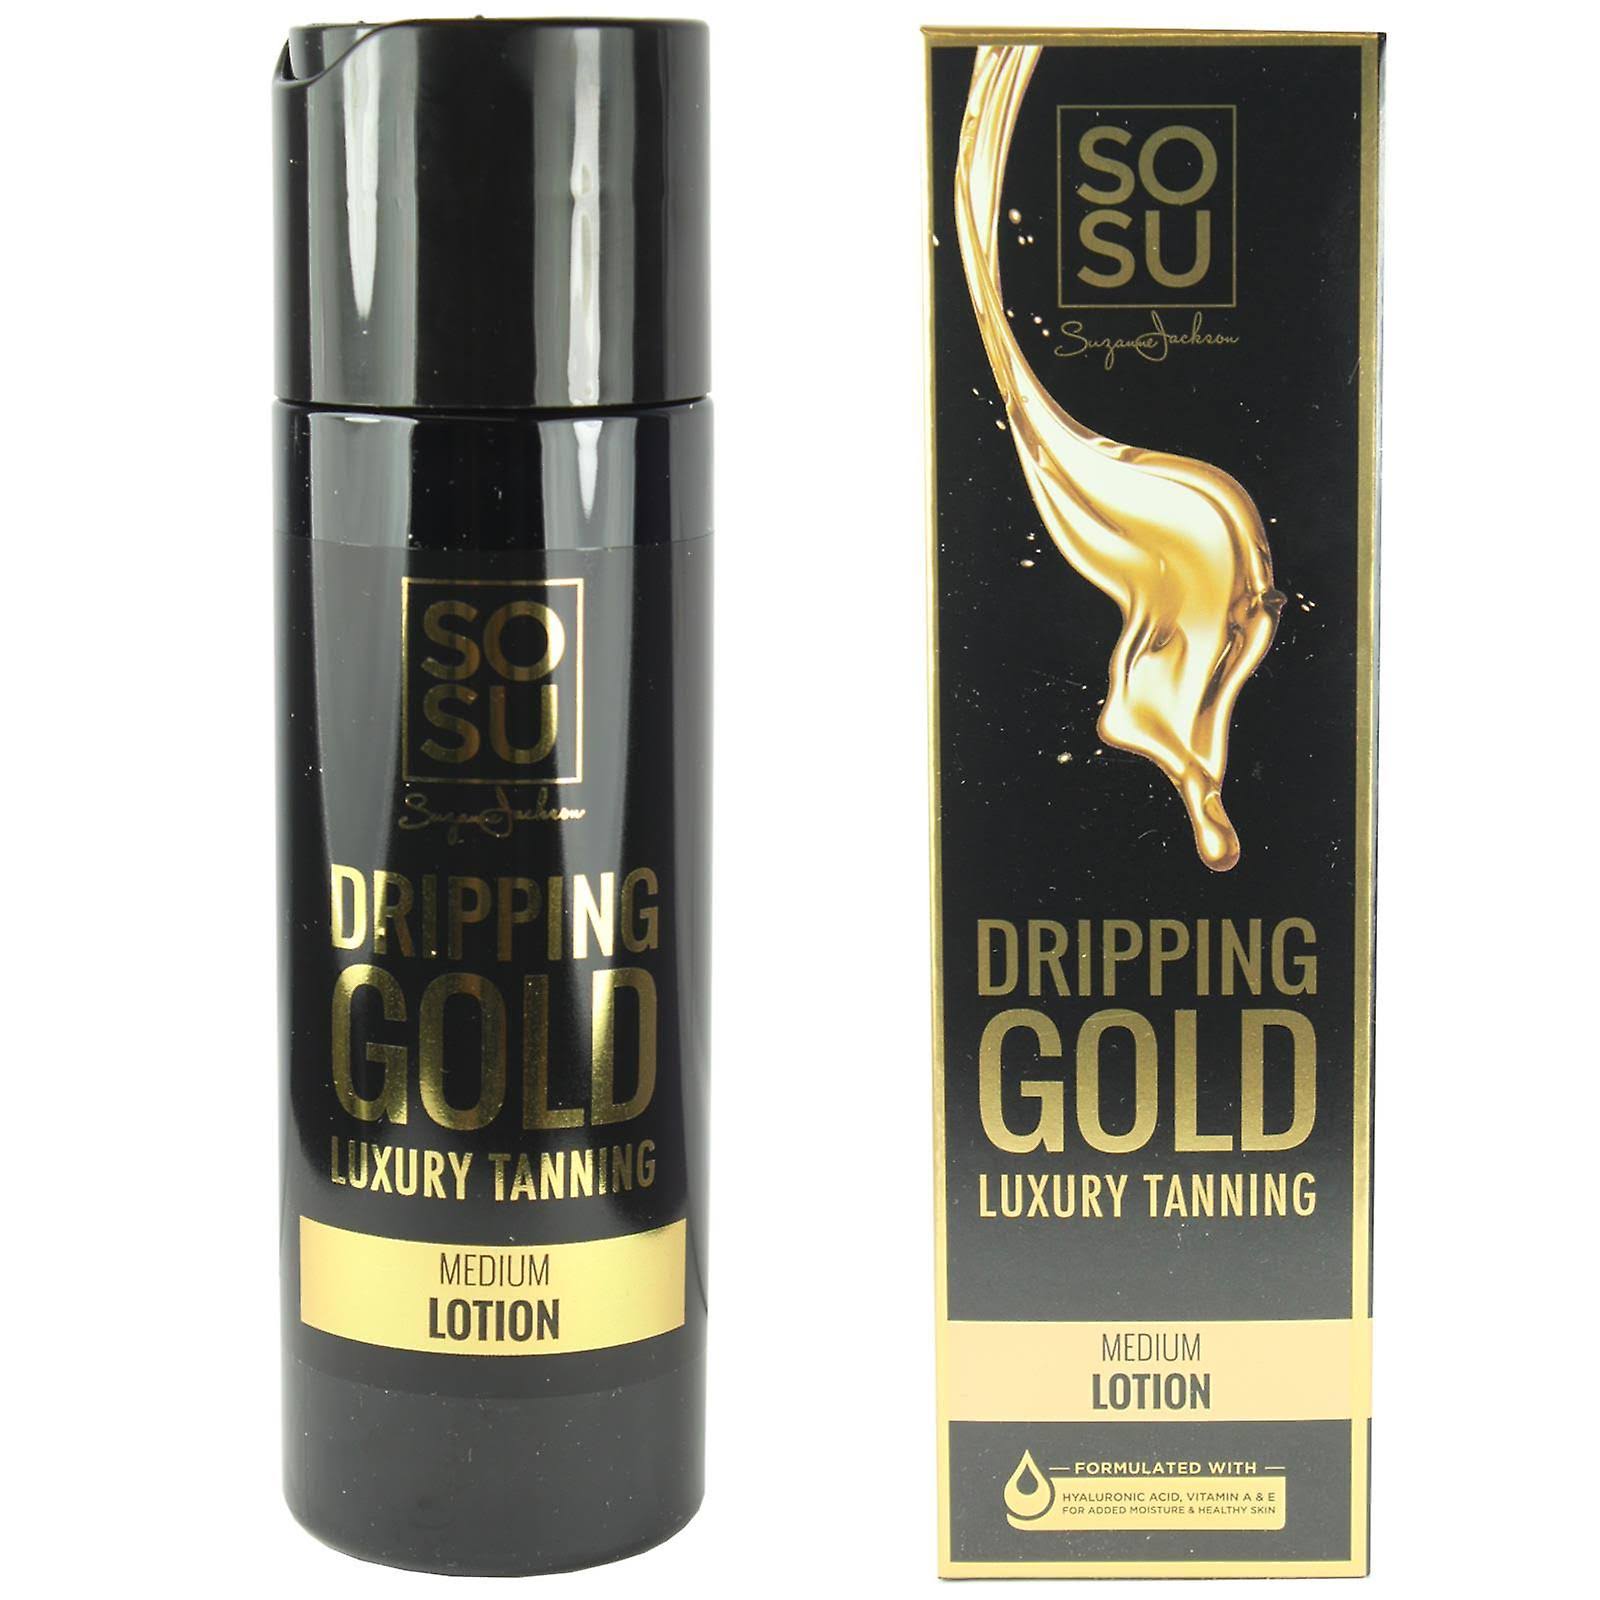 SOSU by Suzanne Jackson Dripping Gold Luxury Tanning Lotion - Medium